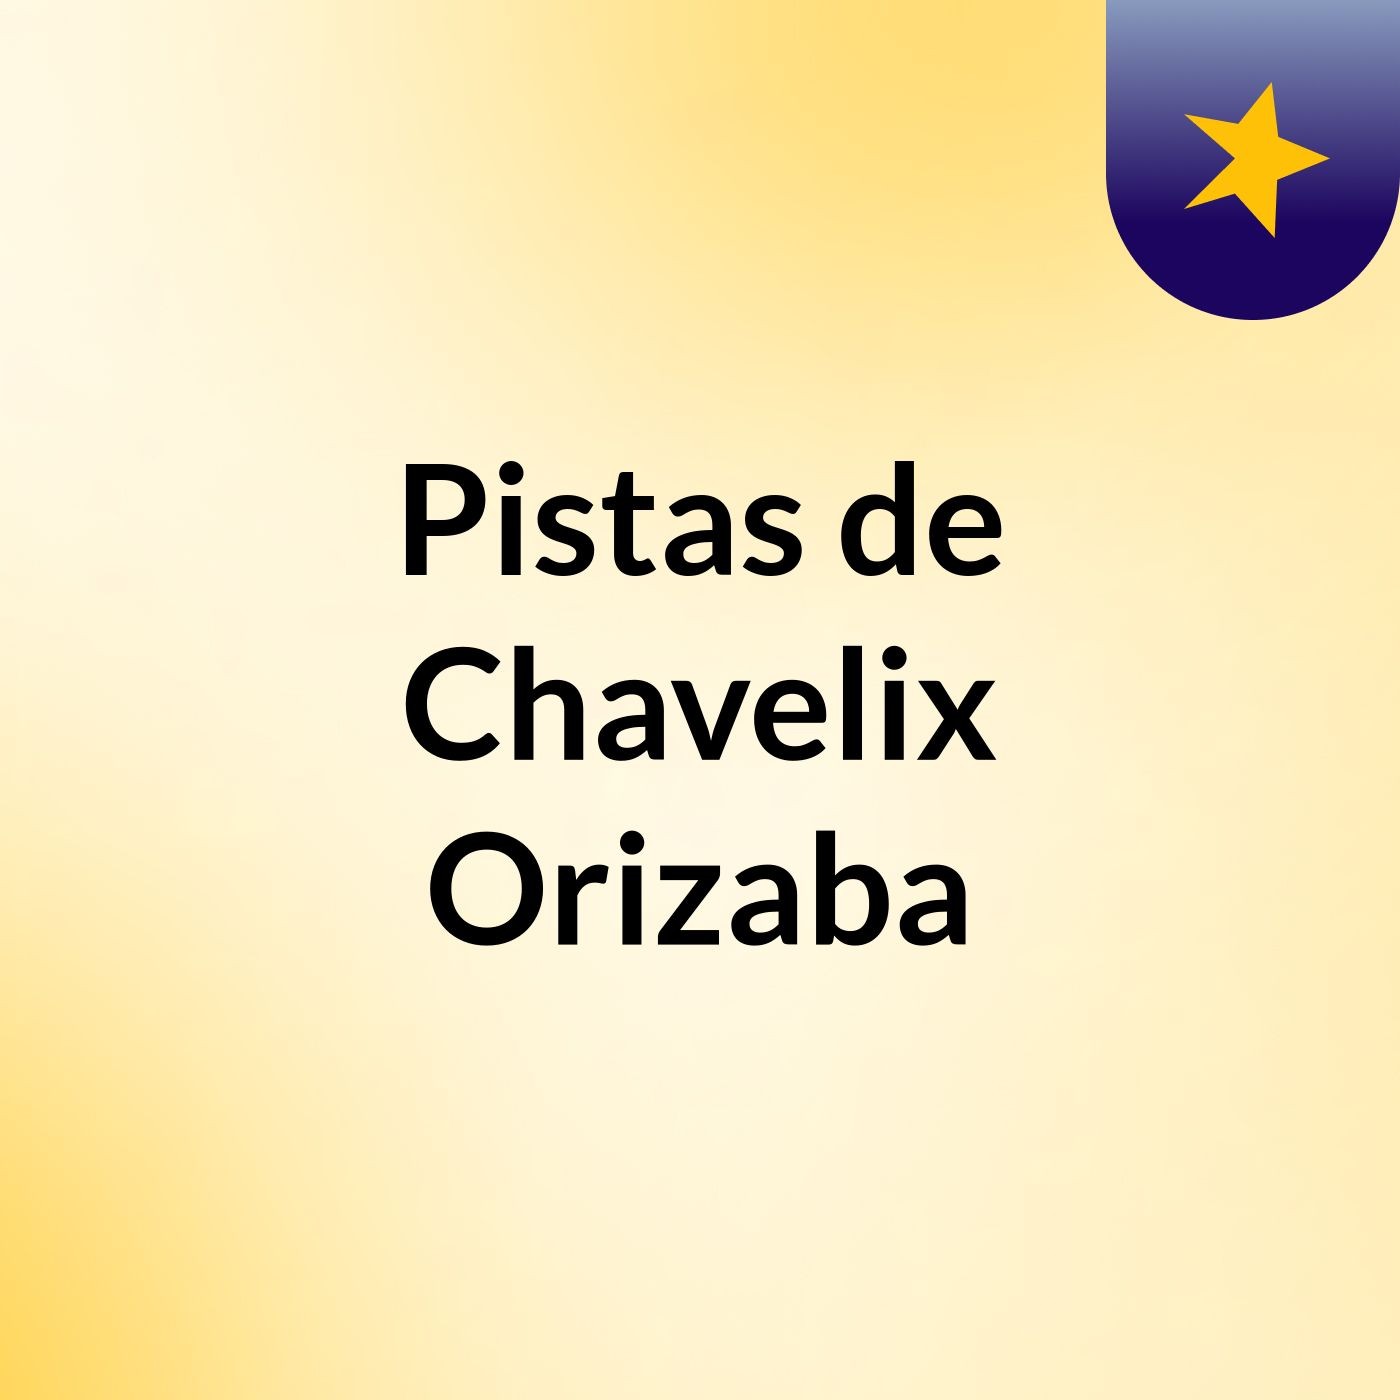 Pistas de Chavelix Orizaba